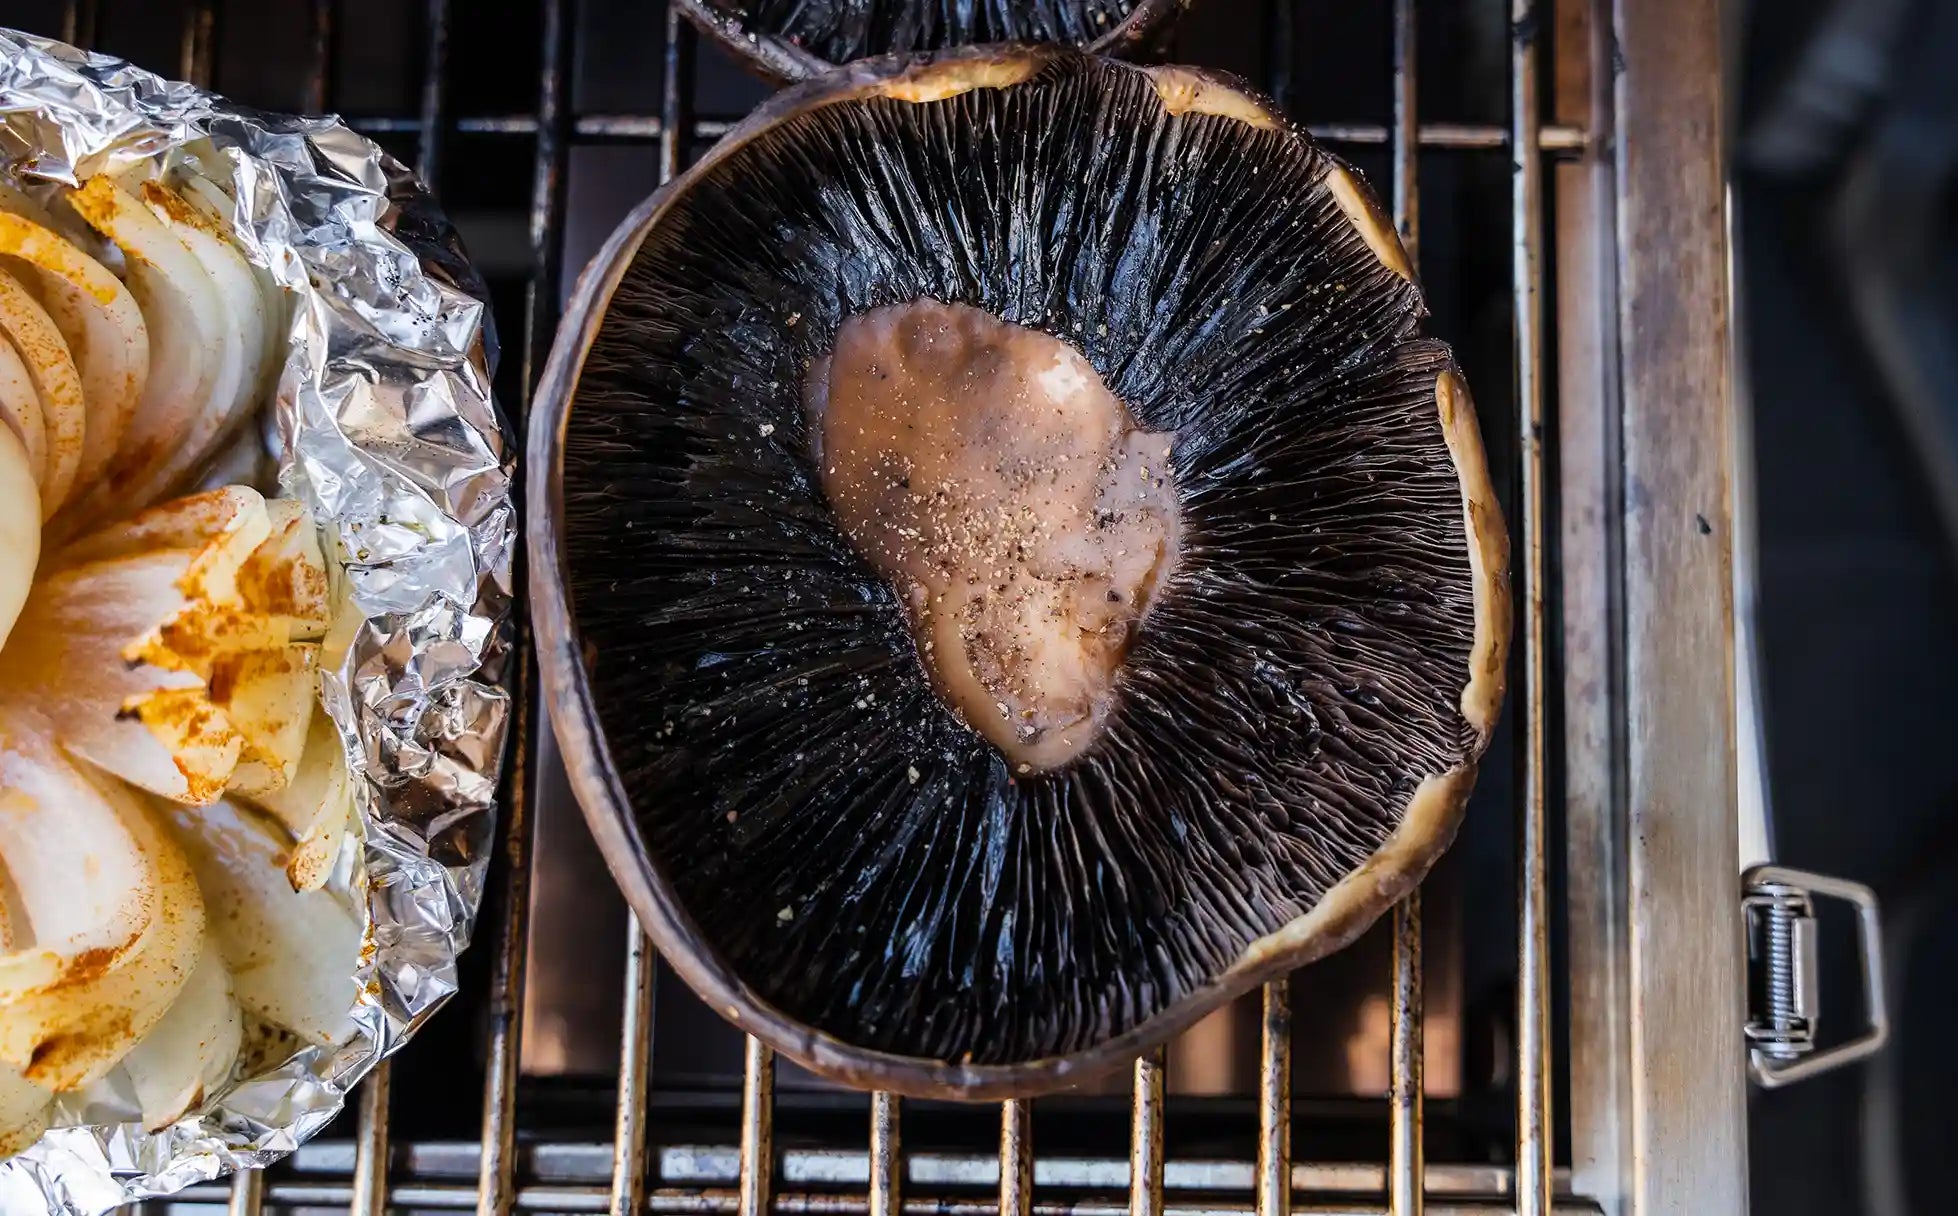 Portobello mushroom on the grill.